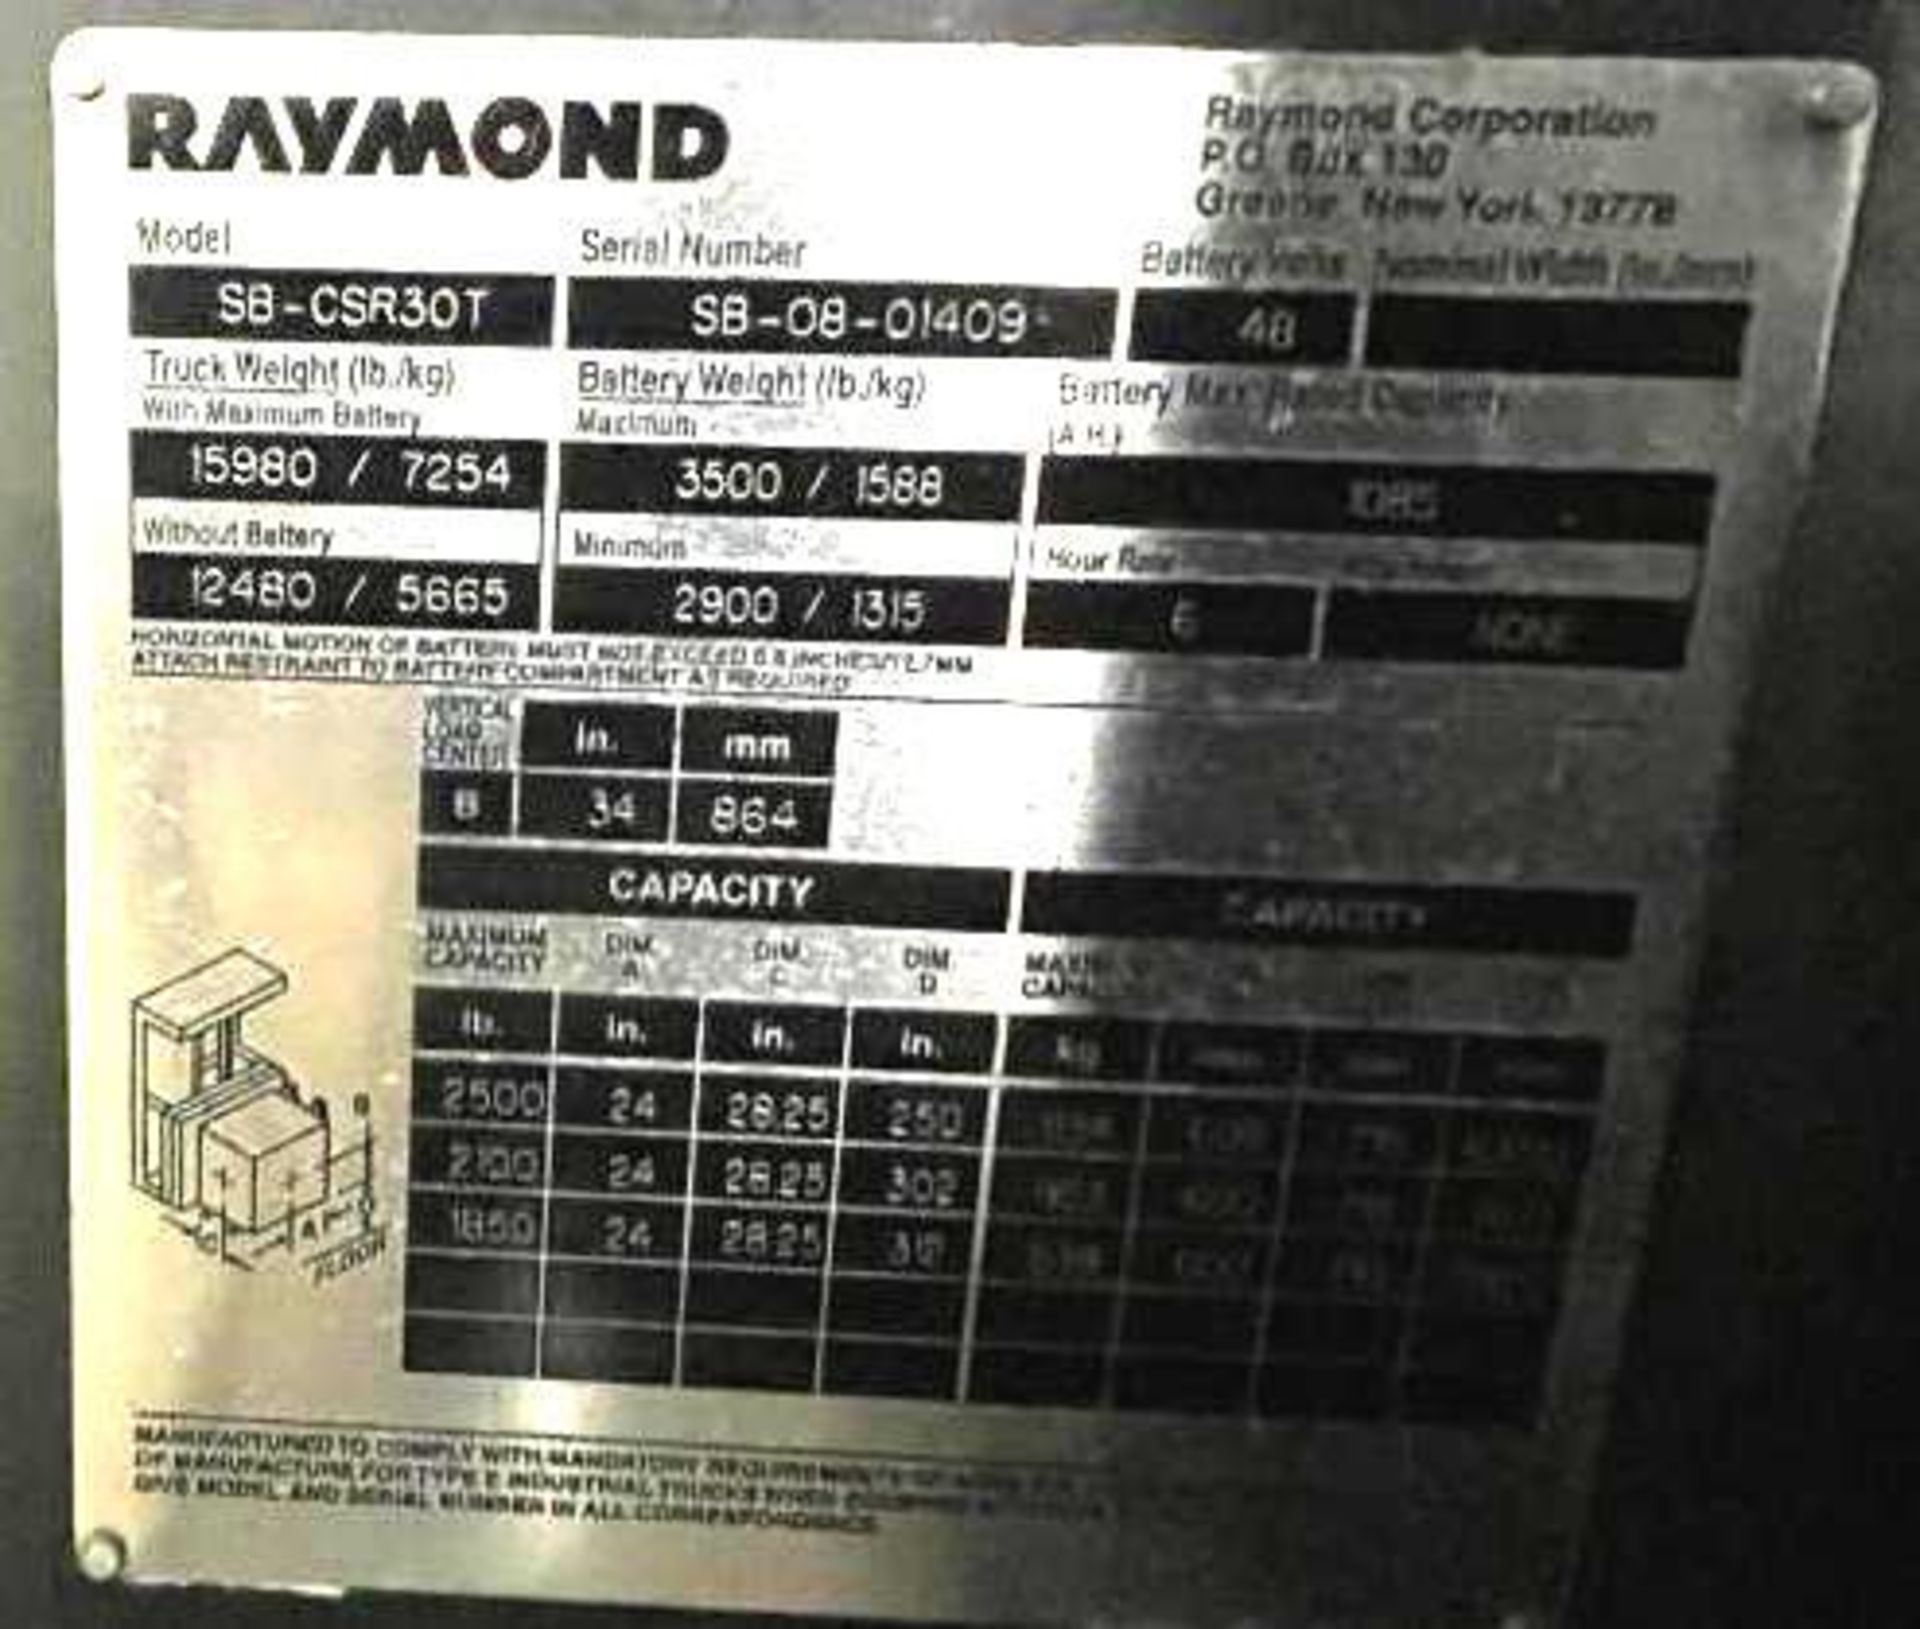 Raymond turret reach truck - Image 31 of 60